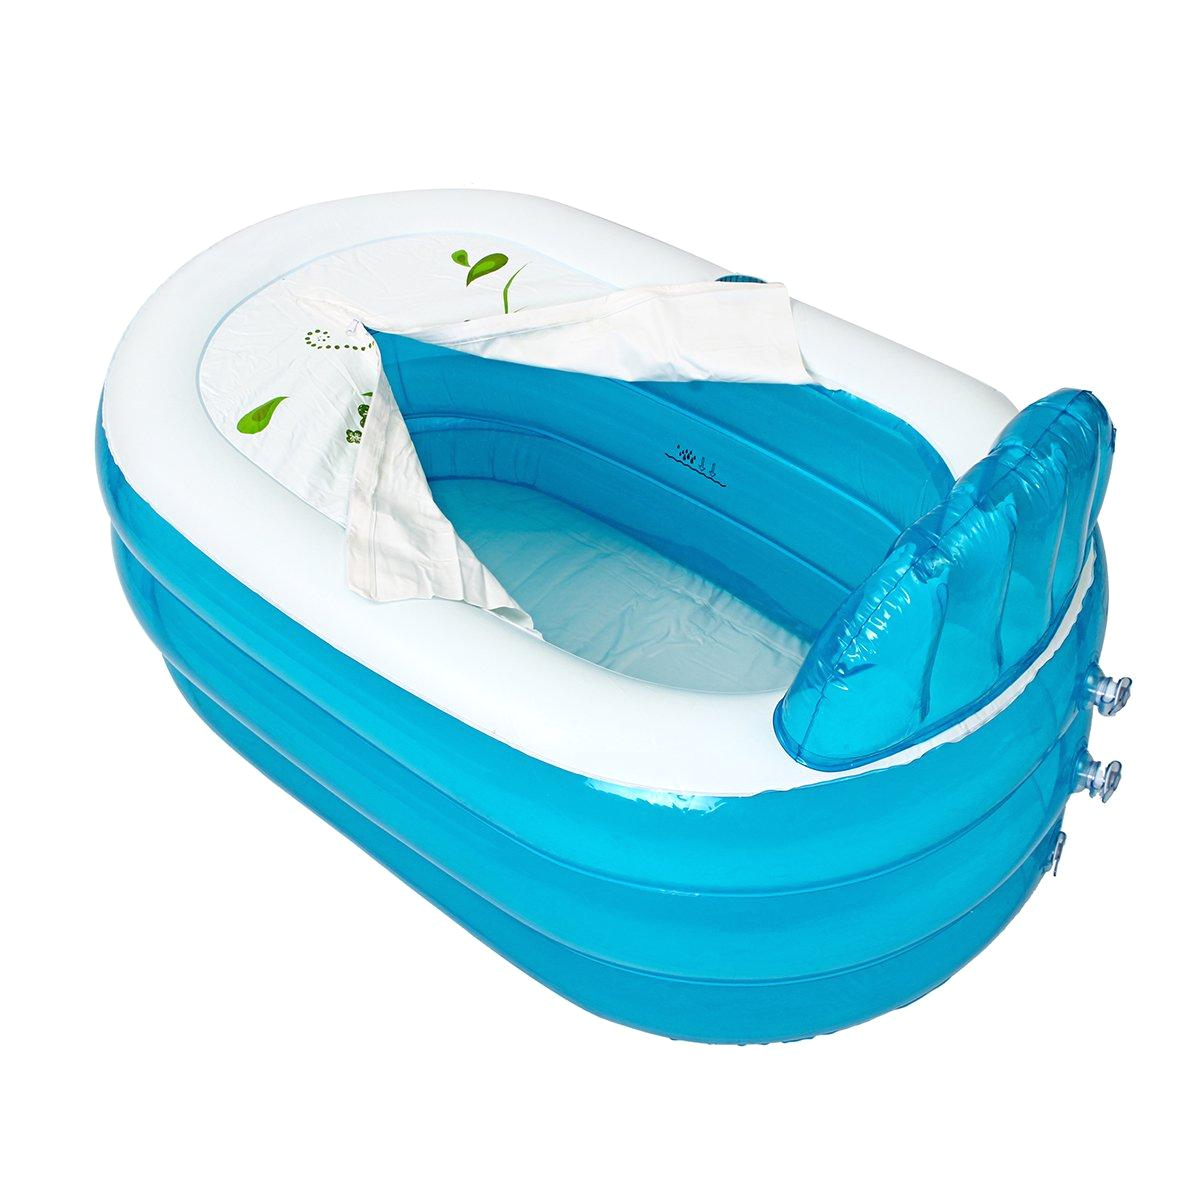 Inflatable Bathtub Portable Bath Tub PVC Camping Travel Folding SPA Bath With Cushion Pipe p